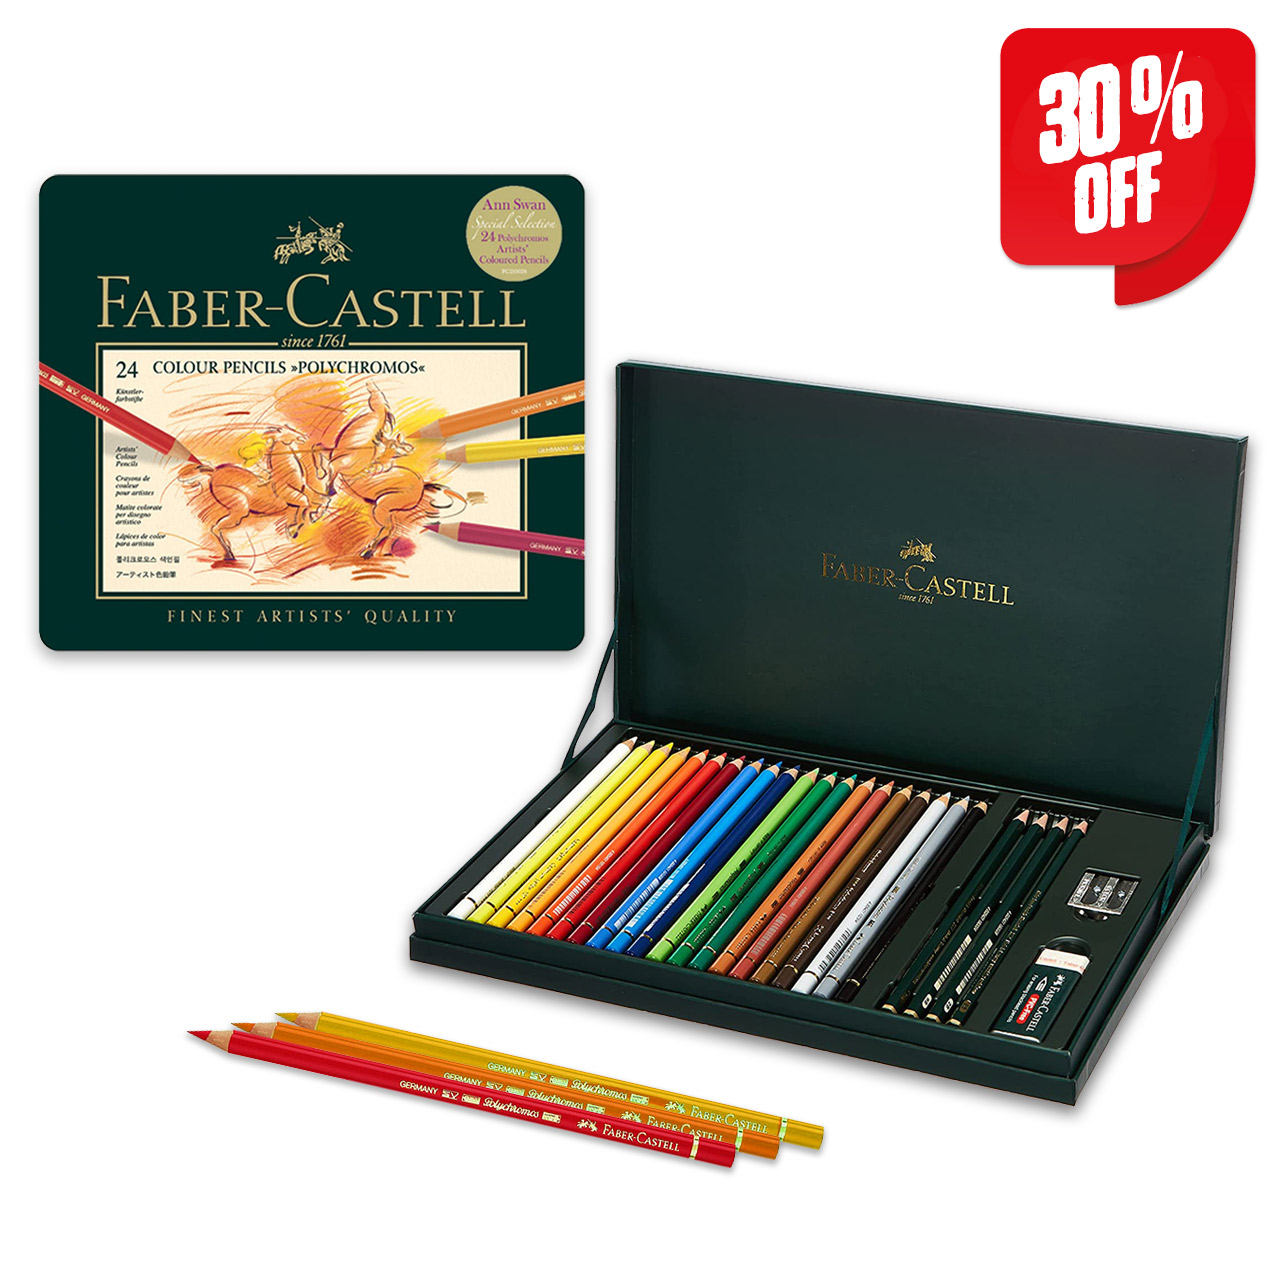 Faber-Castell Polychromos Gift Set & Pencils Tin